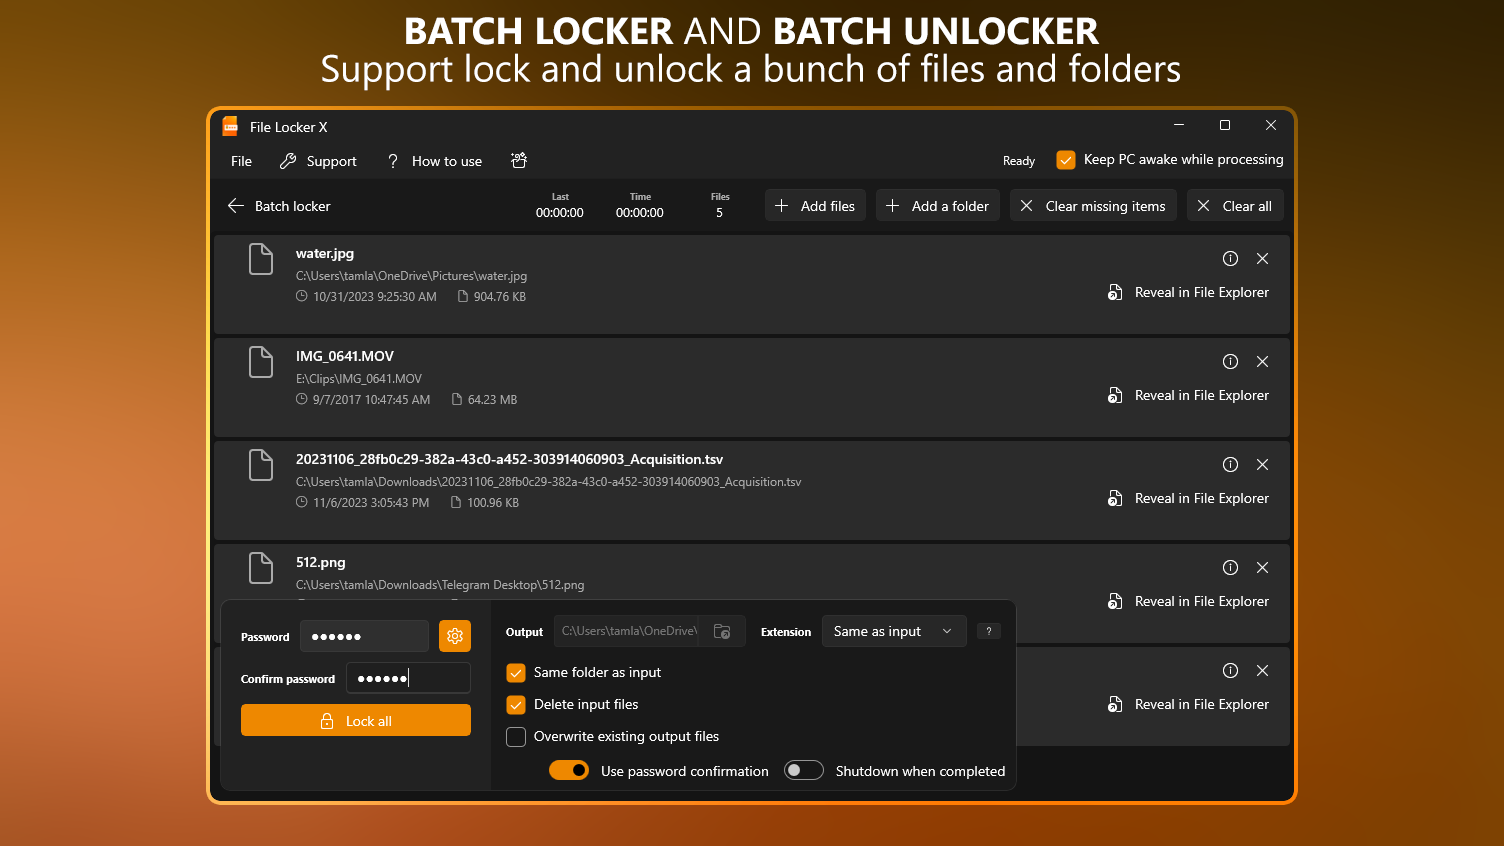 Batch Locker And Batch Unlocker - Support lock and unlock a bunch of files and folders